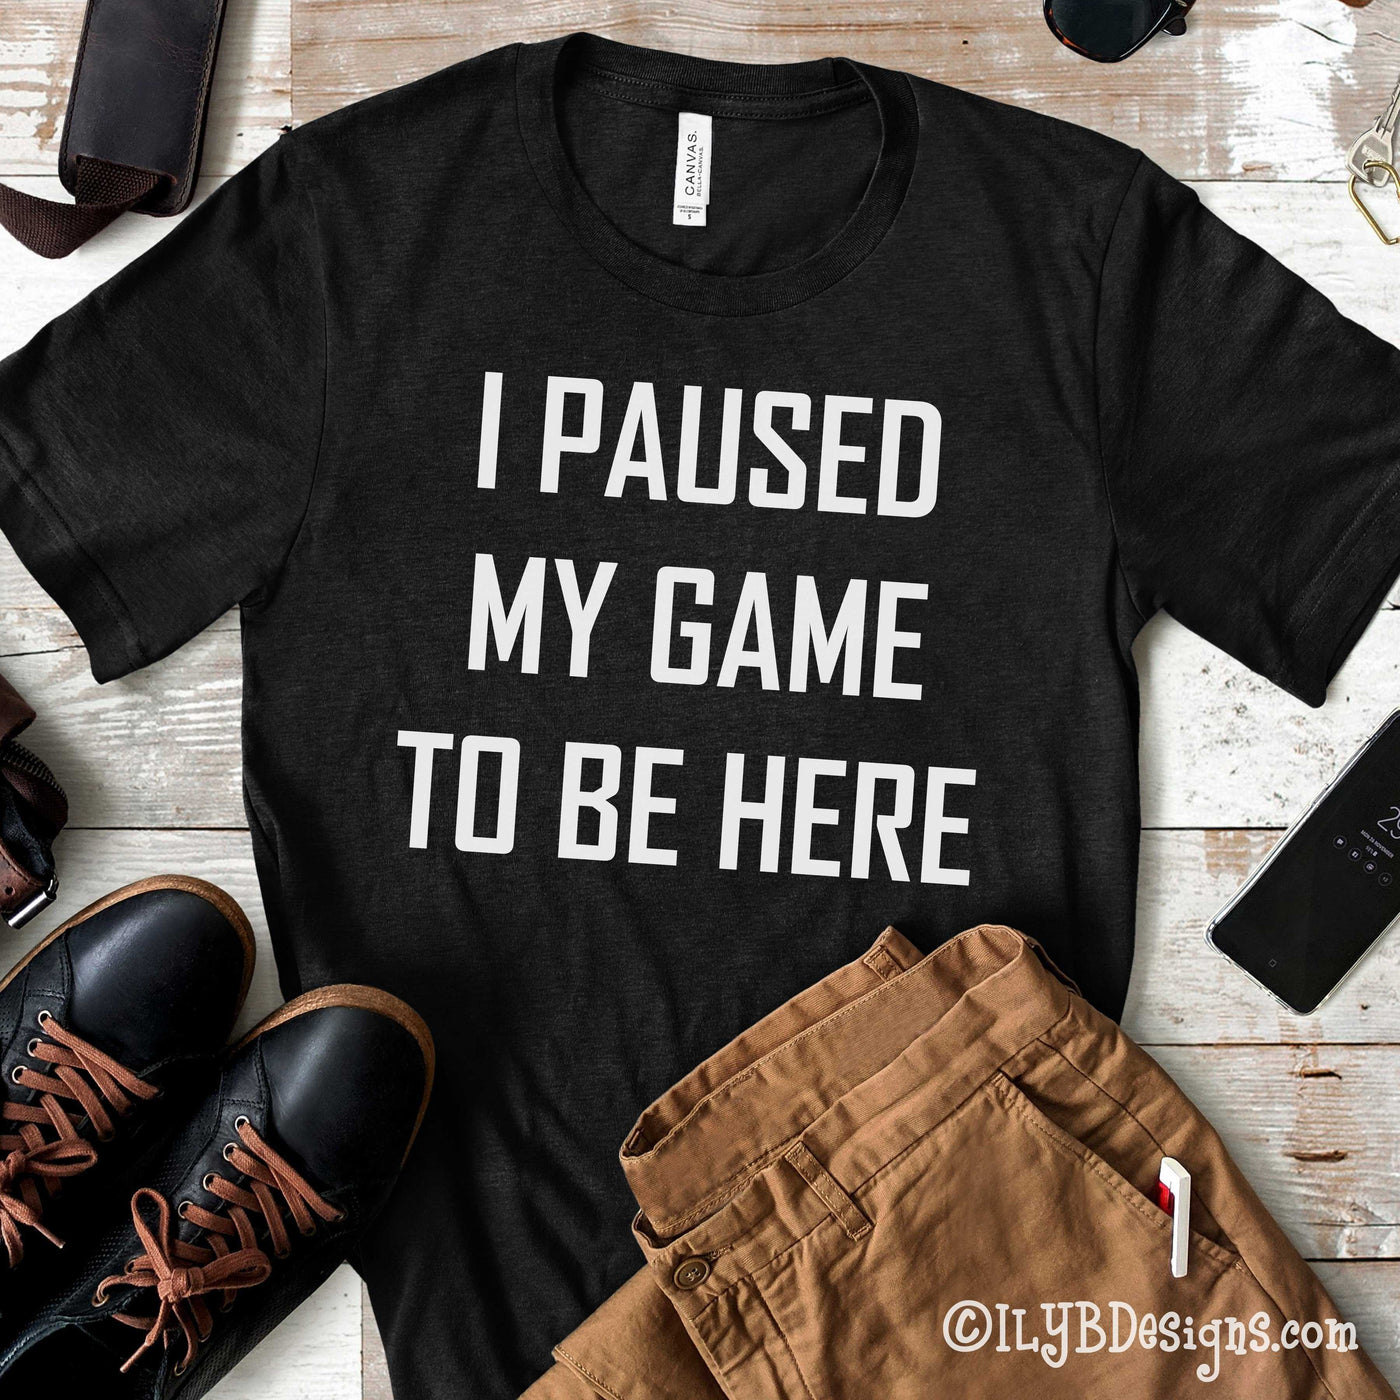 Video Game Shirt - I Paused My Game to Be Here Kids Shirt - Gamer Shirt - Gamer Tee - ILYB Designs